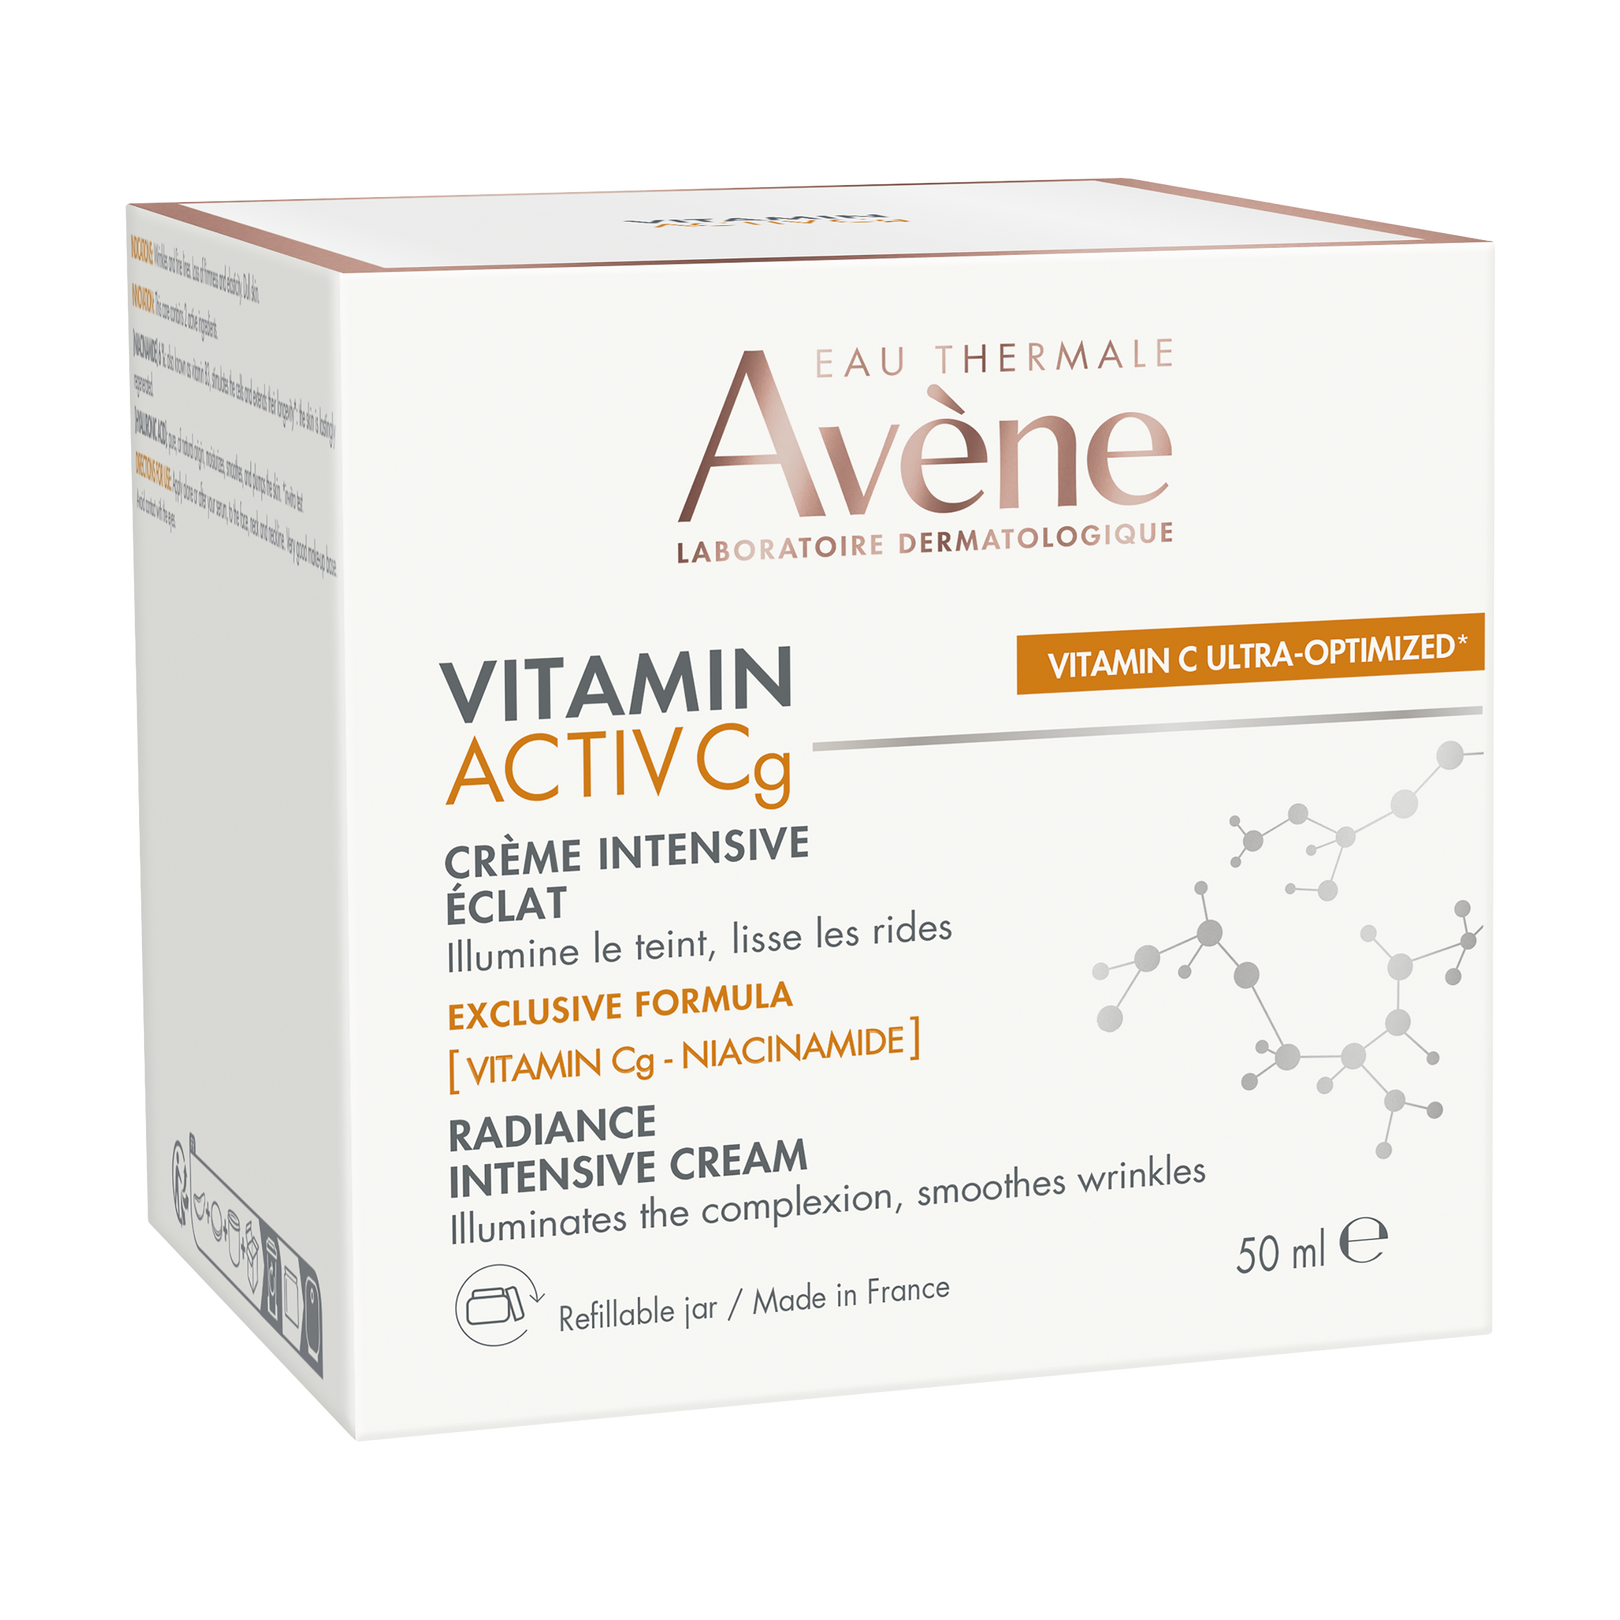 Vitamin Activ Cg Radiance intensive cream